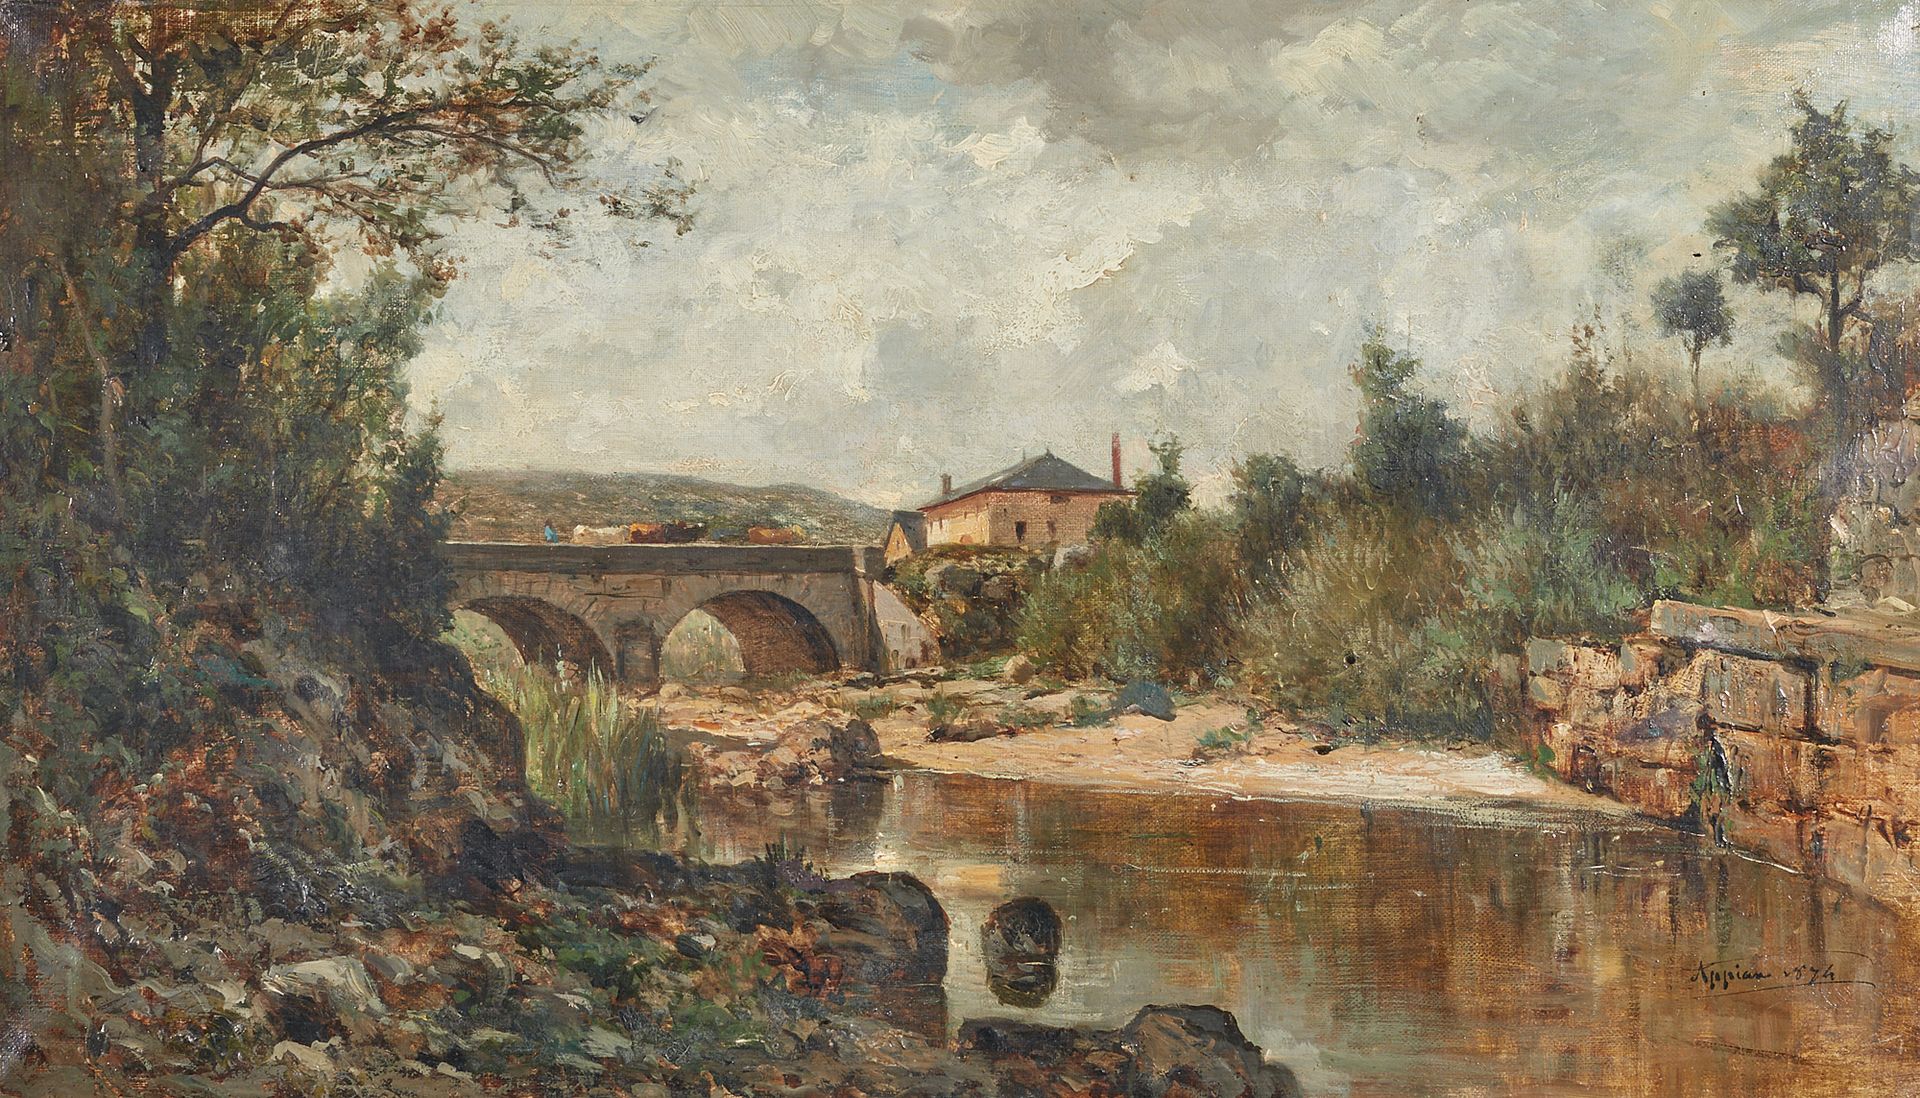 Adolphe APPIAN (1818-1898) Blick von der Brücke am Eingang des Dorfes, 1874
Öl a&hellip;